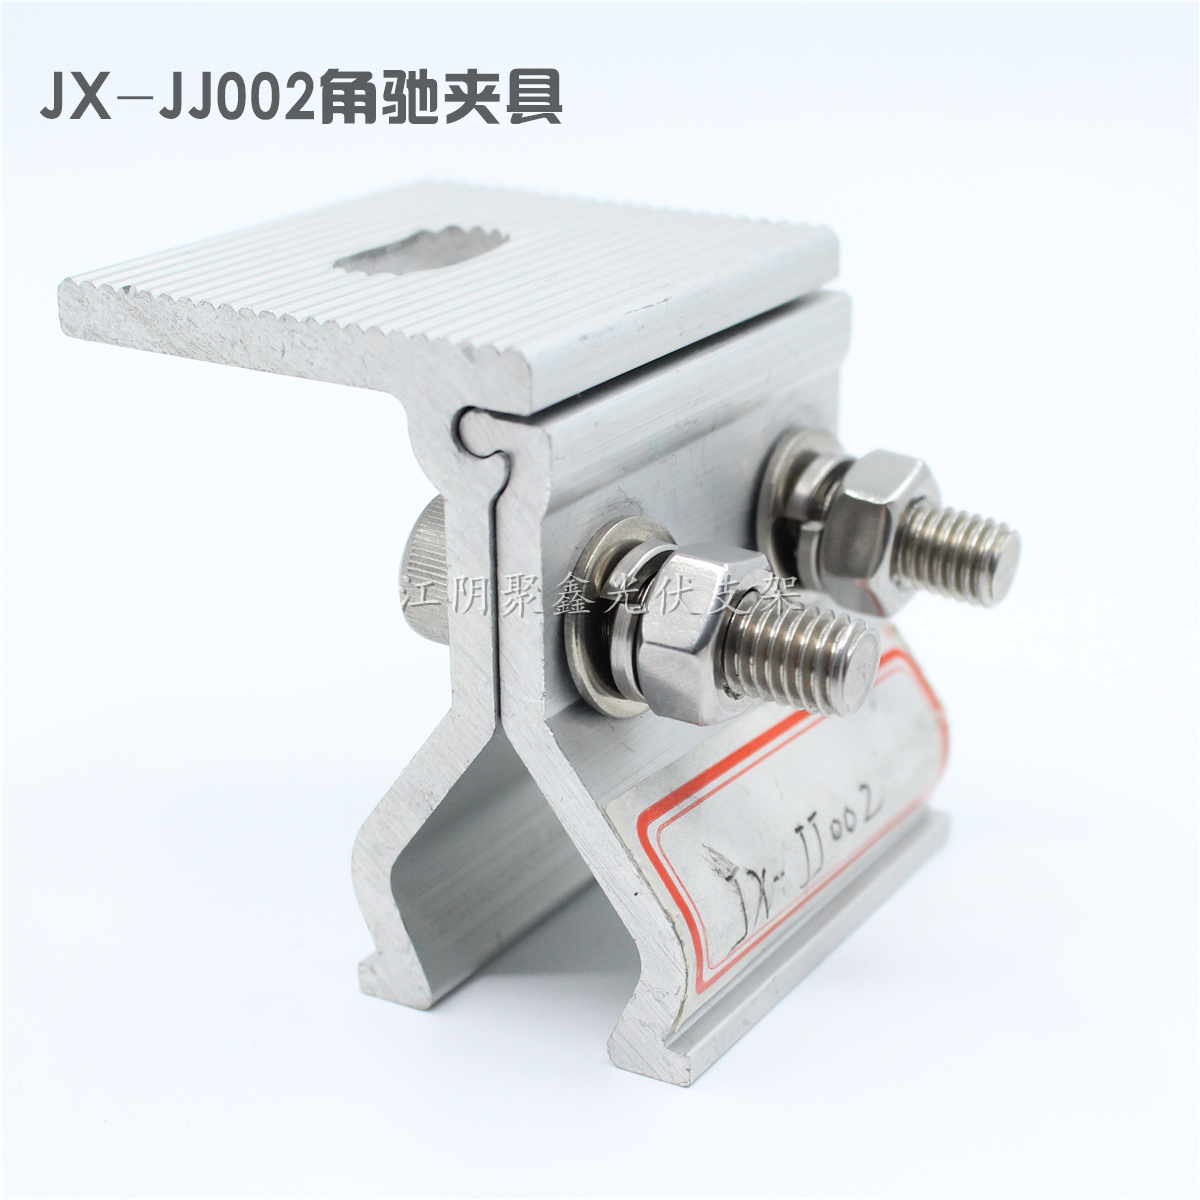 JX-JJ002夹具 (2).JPG